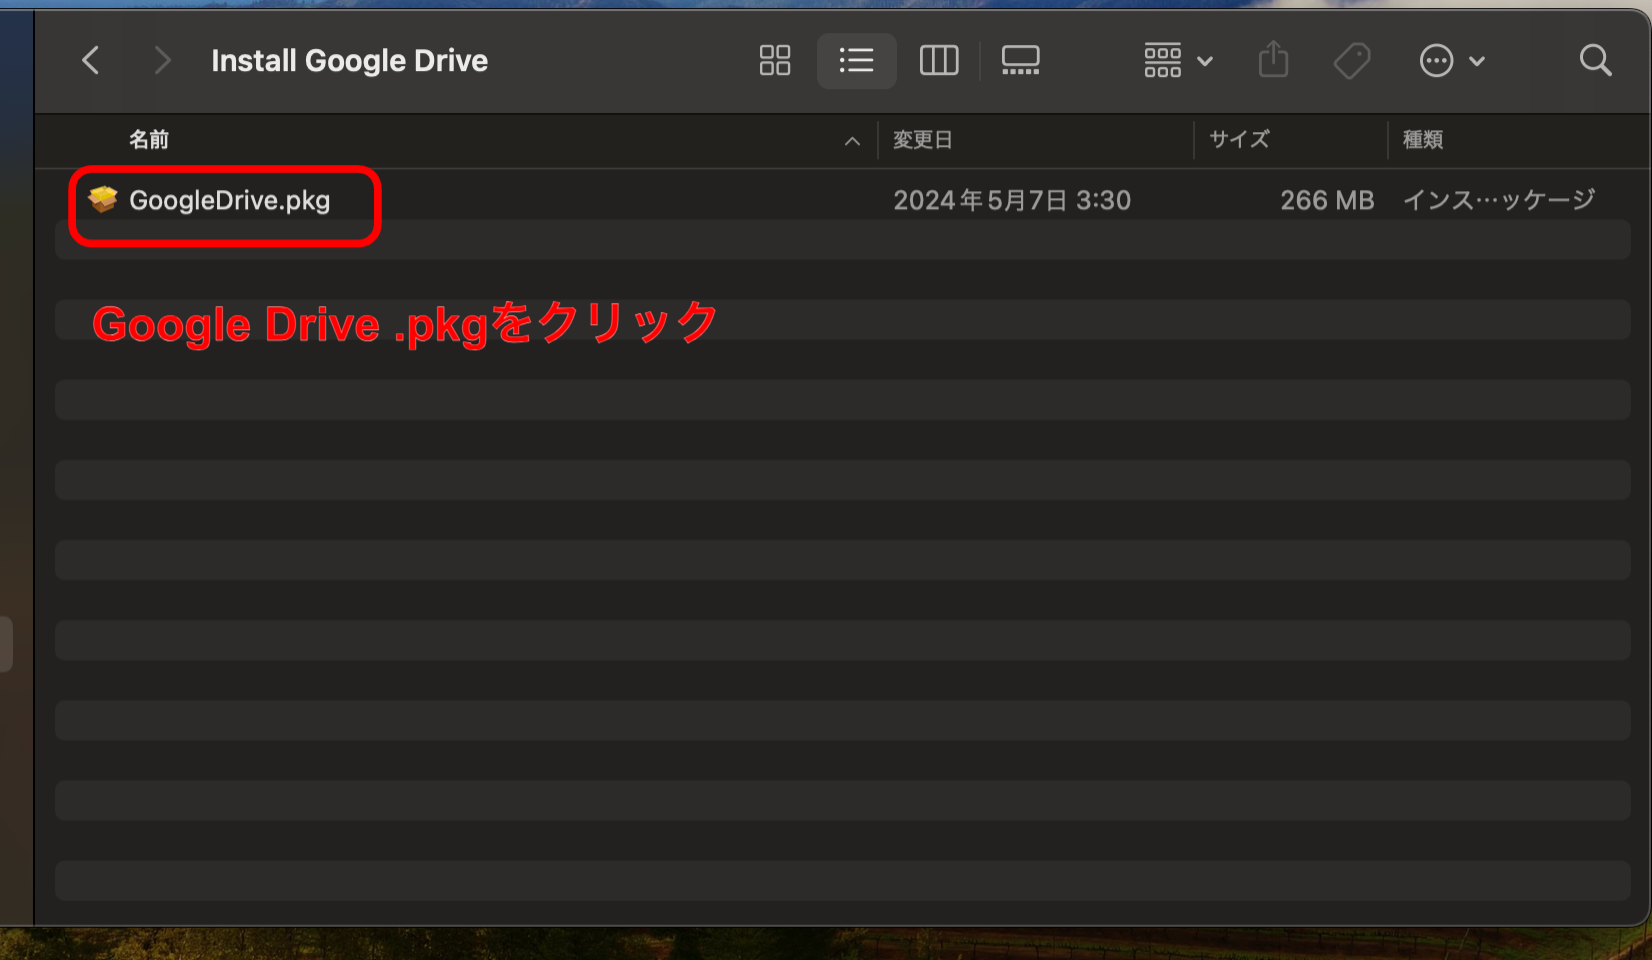 Google Drive．pkgを開く画像